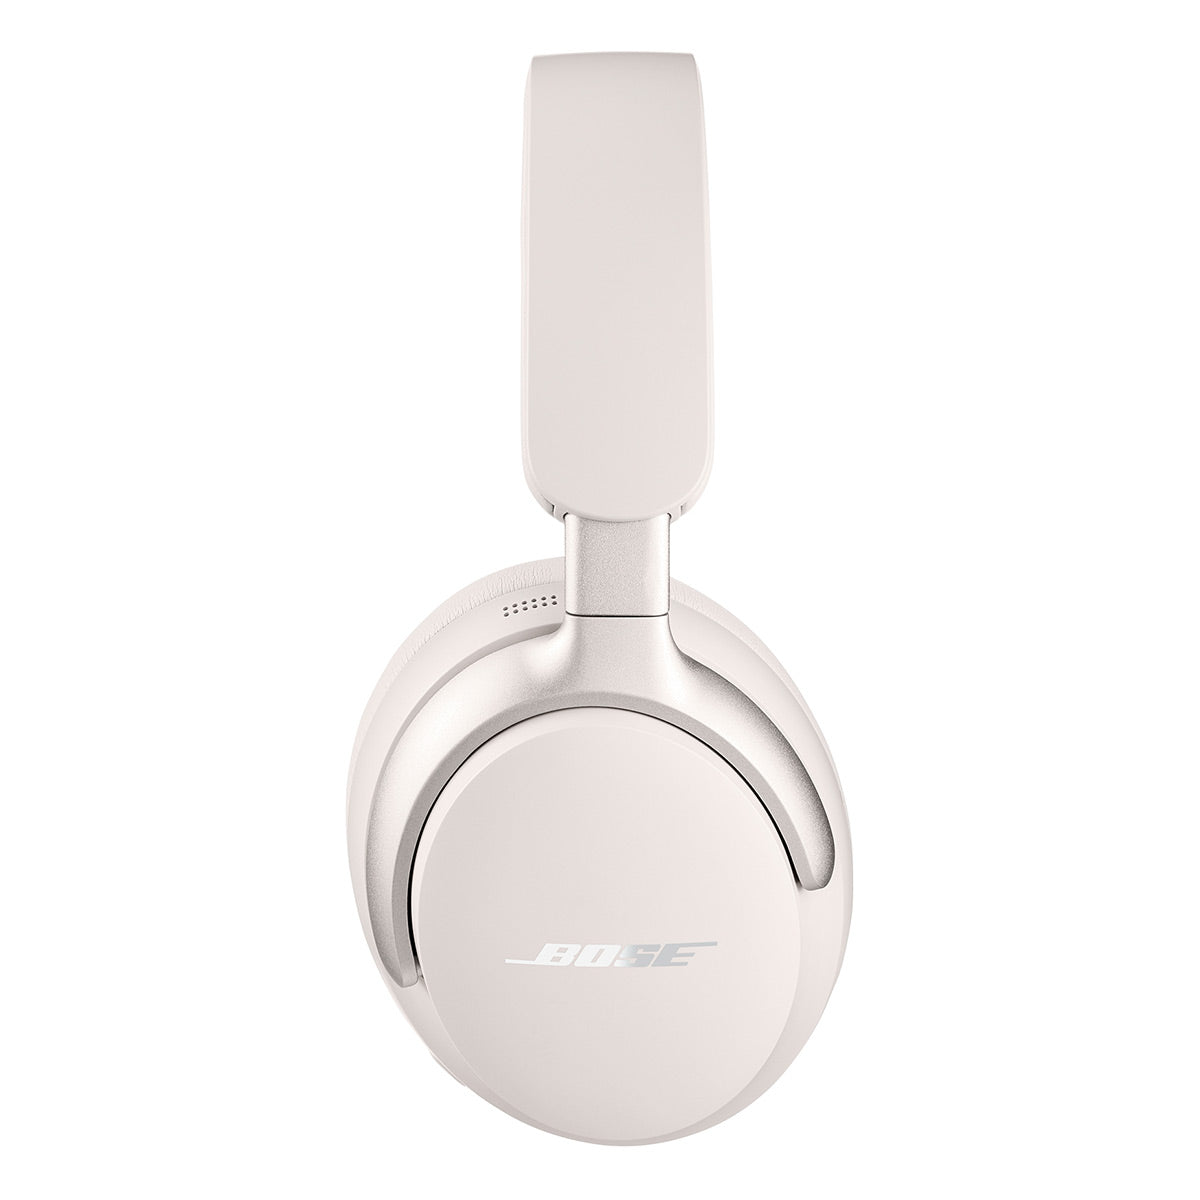 Bose Wireless Headphone Bundle with QuietComfort Ultra Wireless Noise Cancelling Headphones and QuietComfort Noise Cancelling Headphones (White)